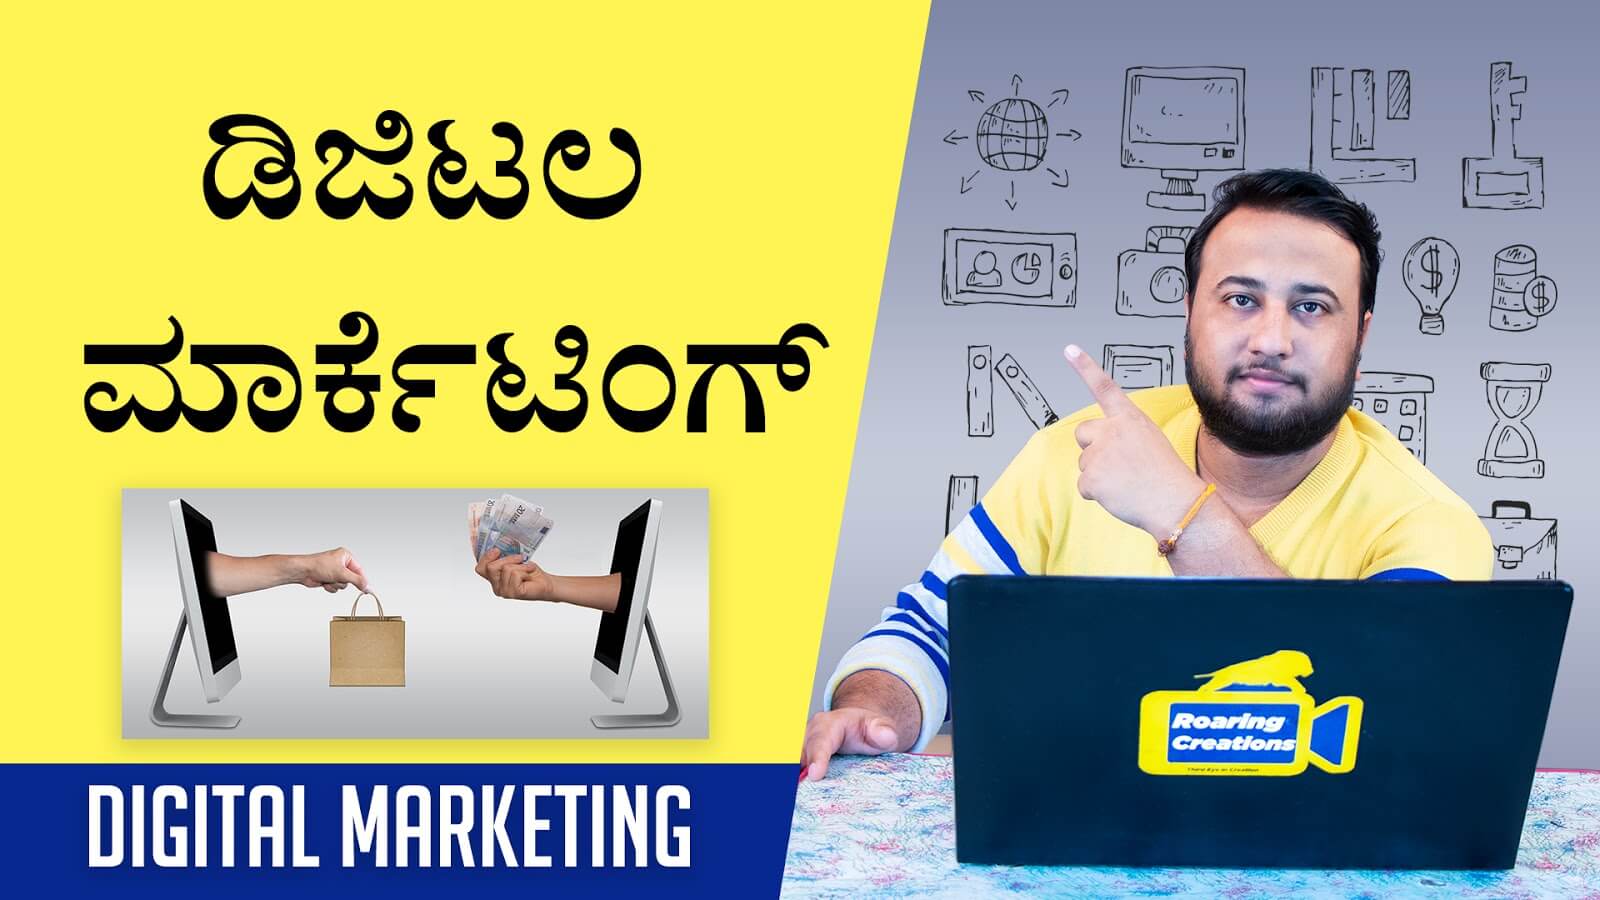 You are currently viewing ಡಿಜಿಟಲ ಮಾರ್ಕೆಟಿಂಗ್ – Digital Marketing in Kannada